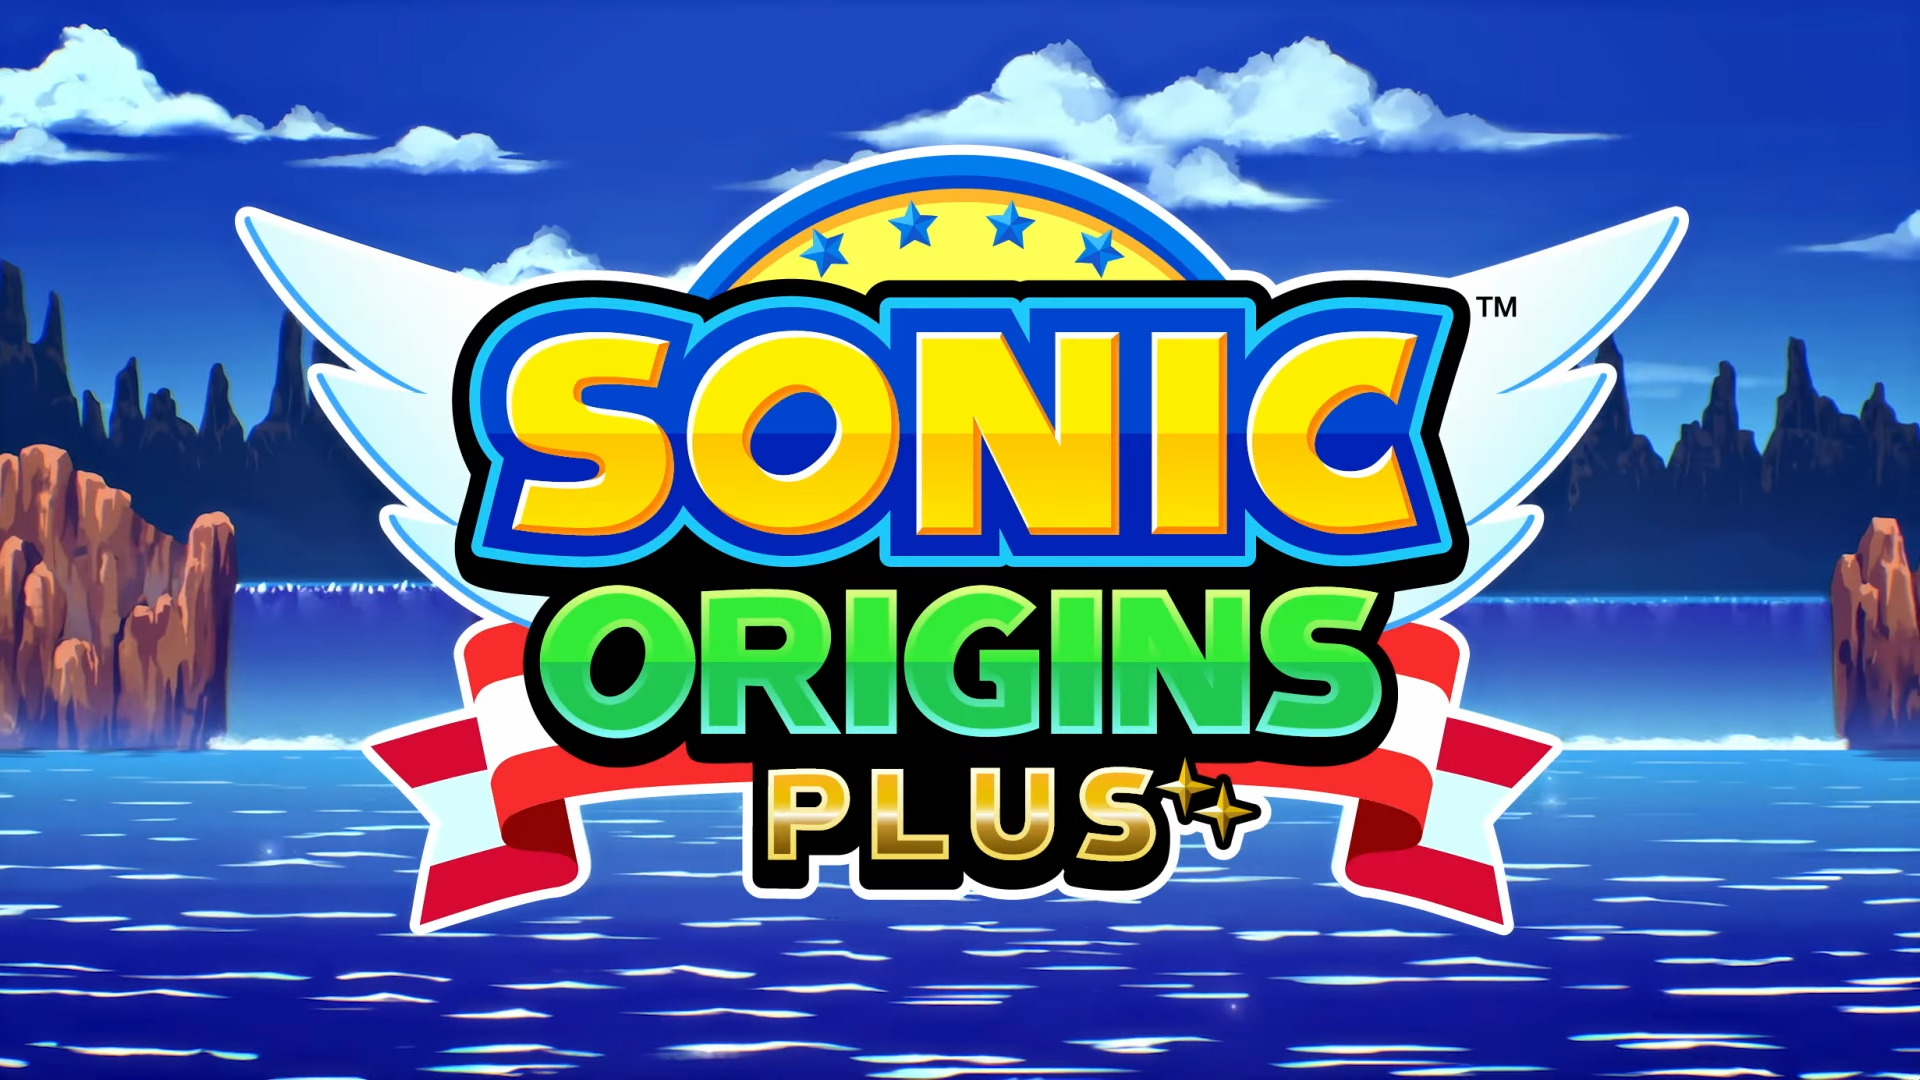 Longplay of Sonic Origins - Plus (DLC) 